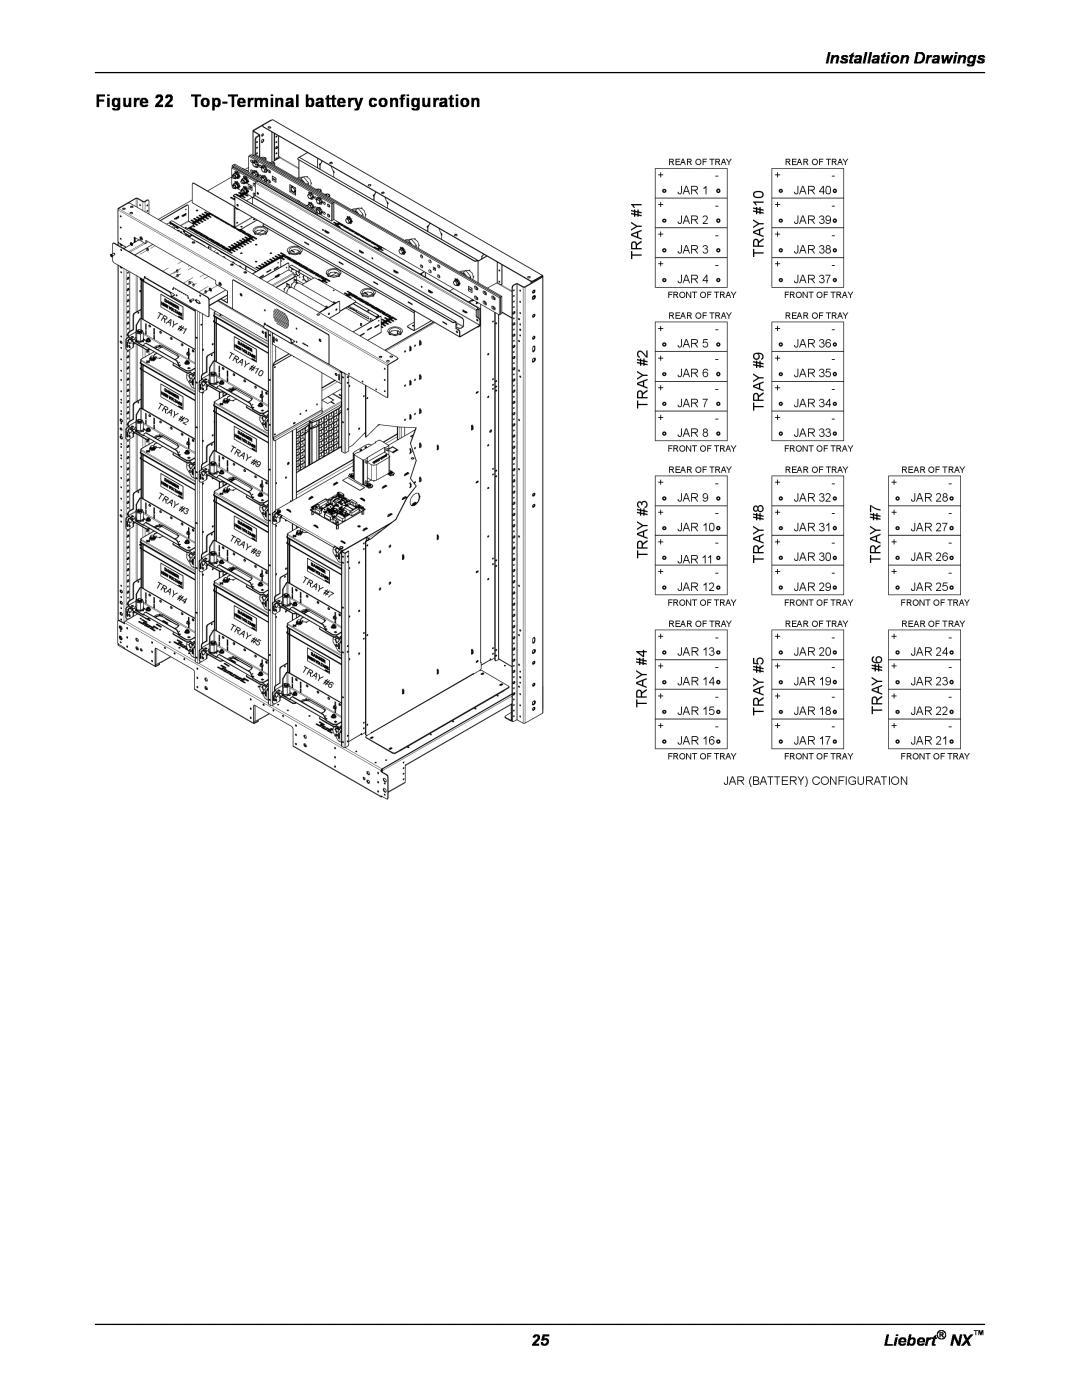 Emerson 225-600KVA Top-Terminal battery configuration, Installation Drawings, Liebert NX, TRAY #10, TRAY #7 TRAY #6 